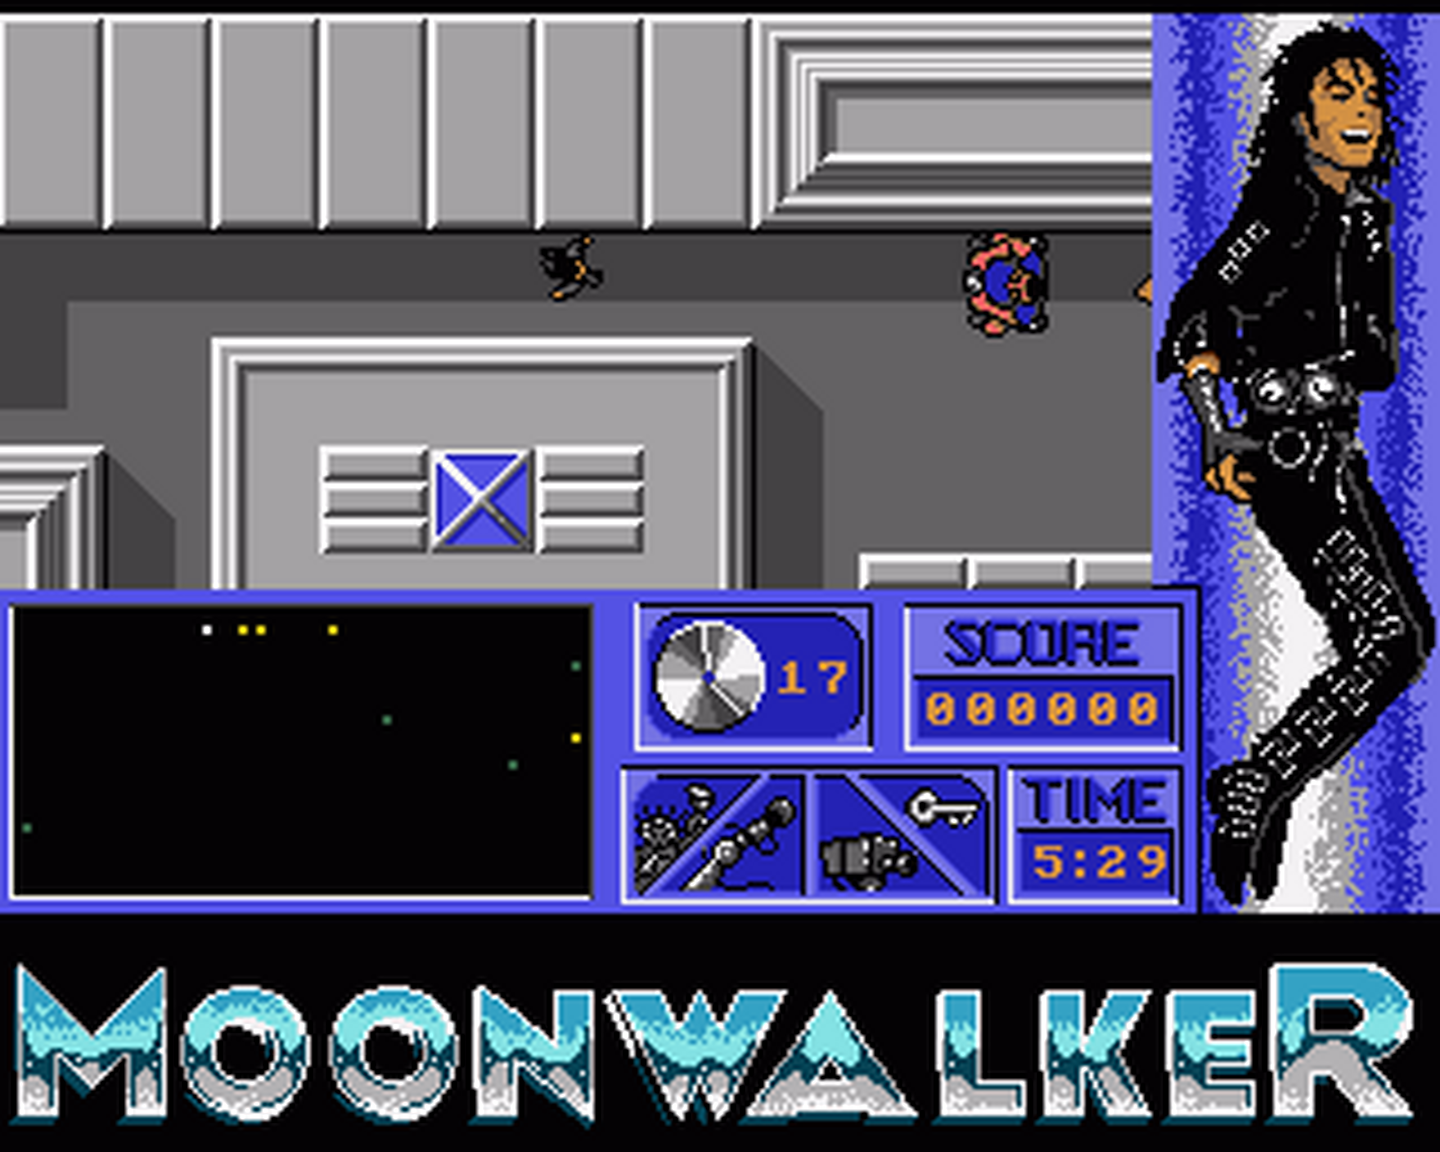 Amiga GameBase Moonwalker U.S._Gold 1989